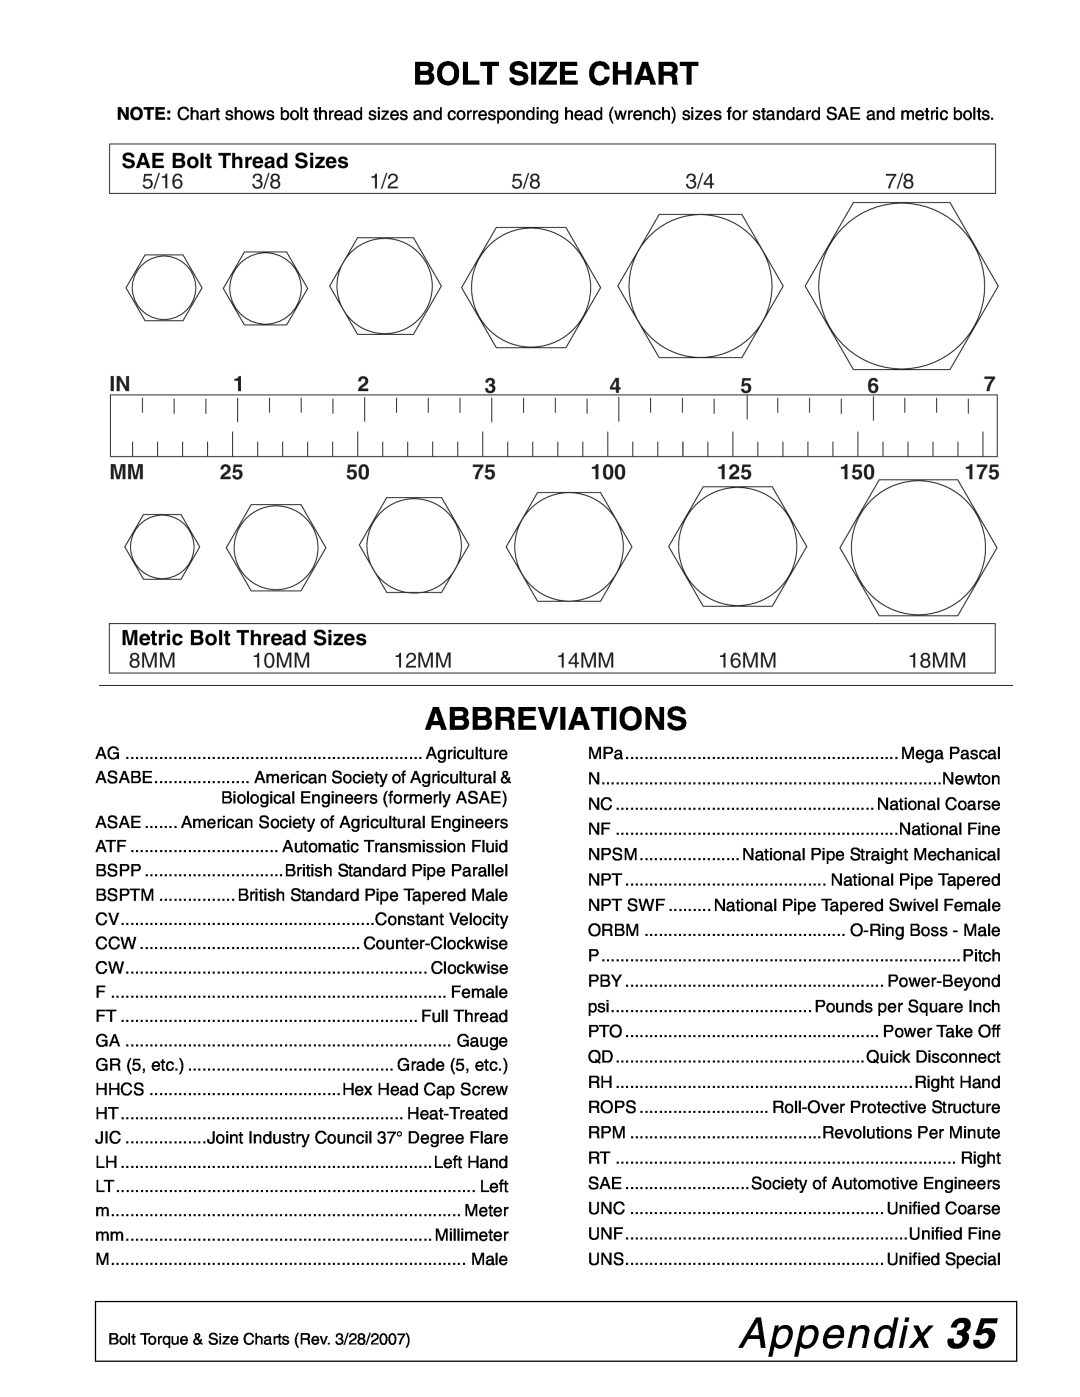 Woods Equipment LU126 Appendix, Bolt Size Chart, Abbreviations, SAE Bolt Thread Sizes, 5/16, Metric Bolt Thread Sizes 